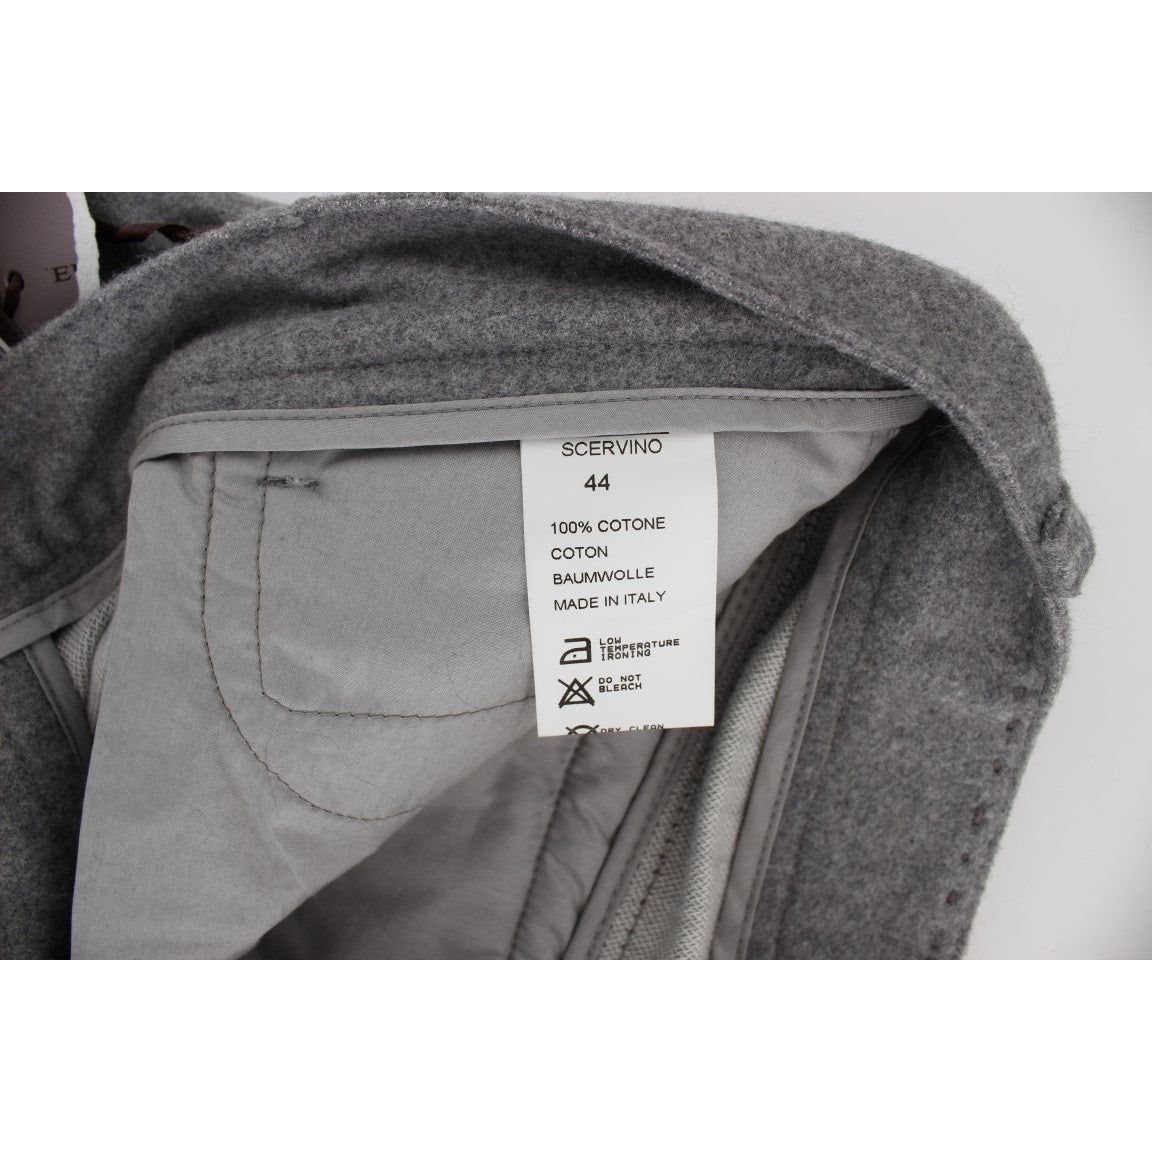 Ermanno Scervino Chic Gray Casual Cotton Pants gray-cotton-straight-fit-casual-pants 330370-gray-cotton-straight-fit-casual-pants-5.jpg